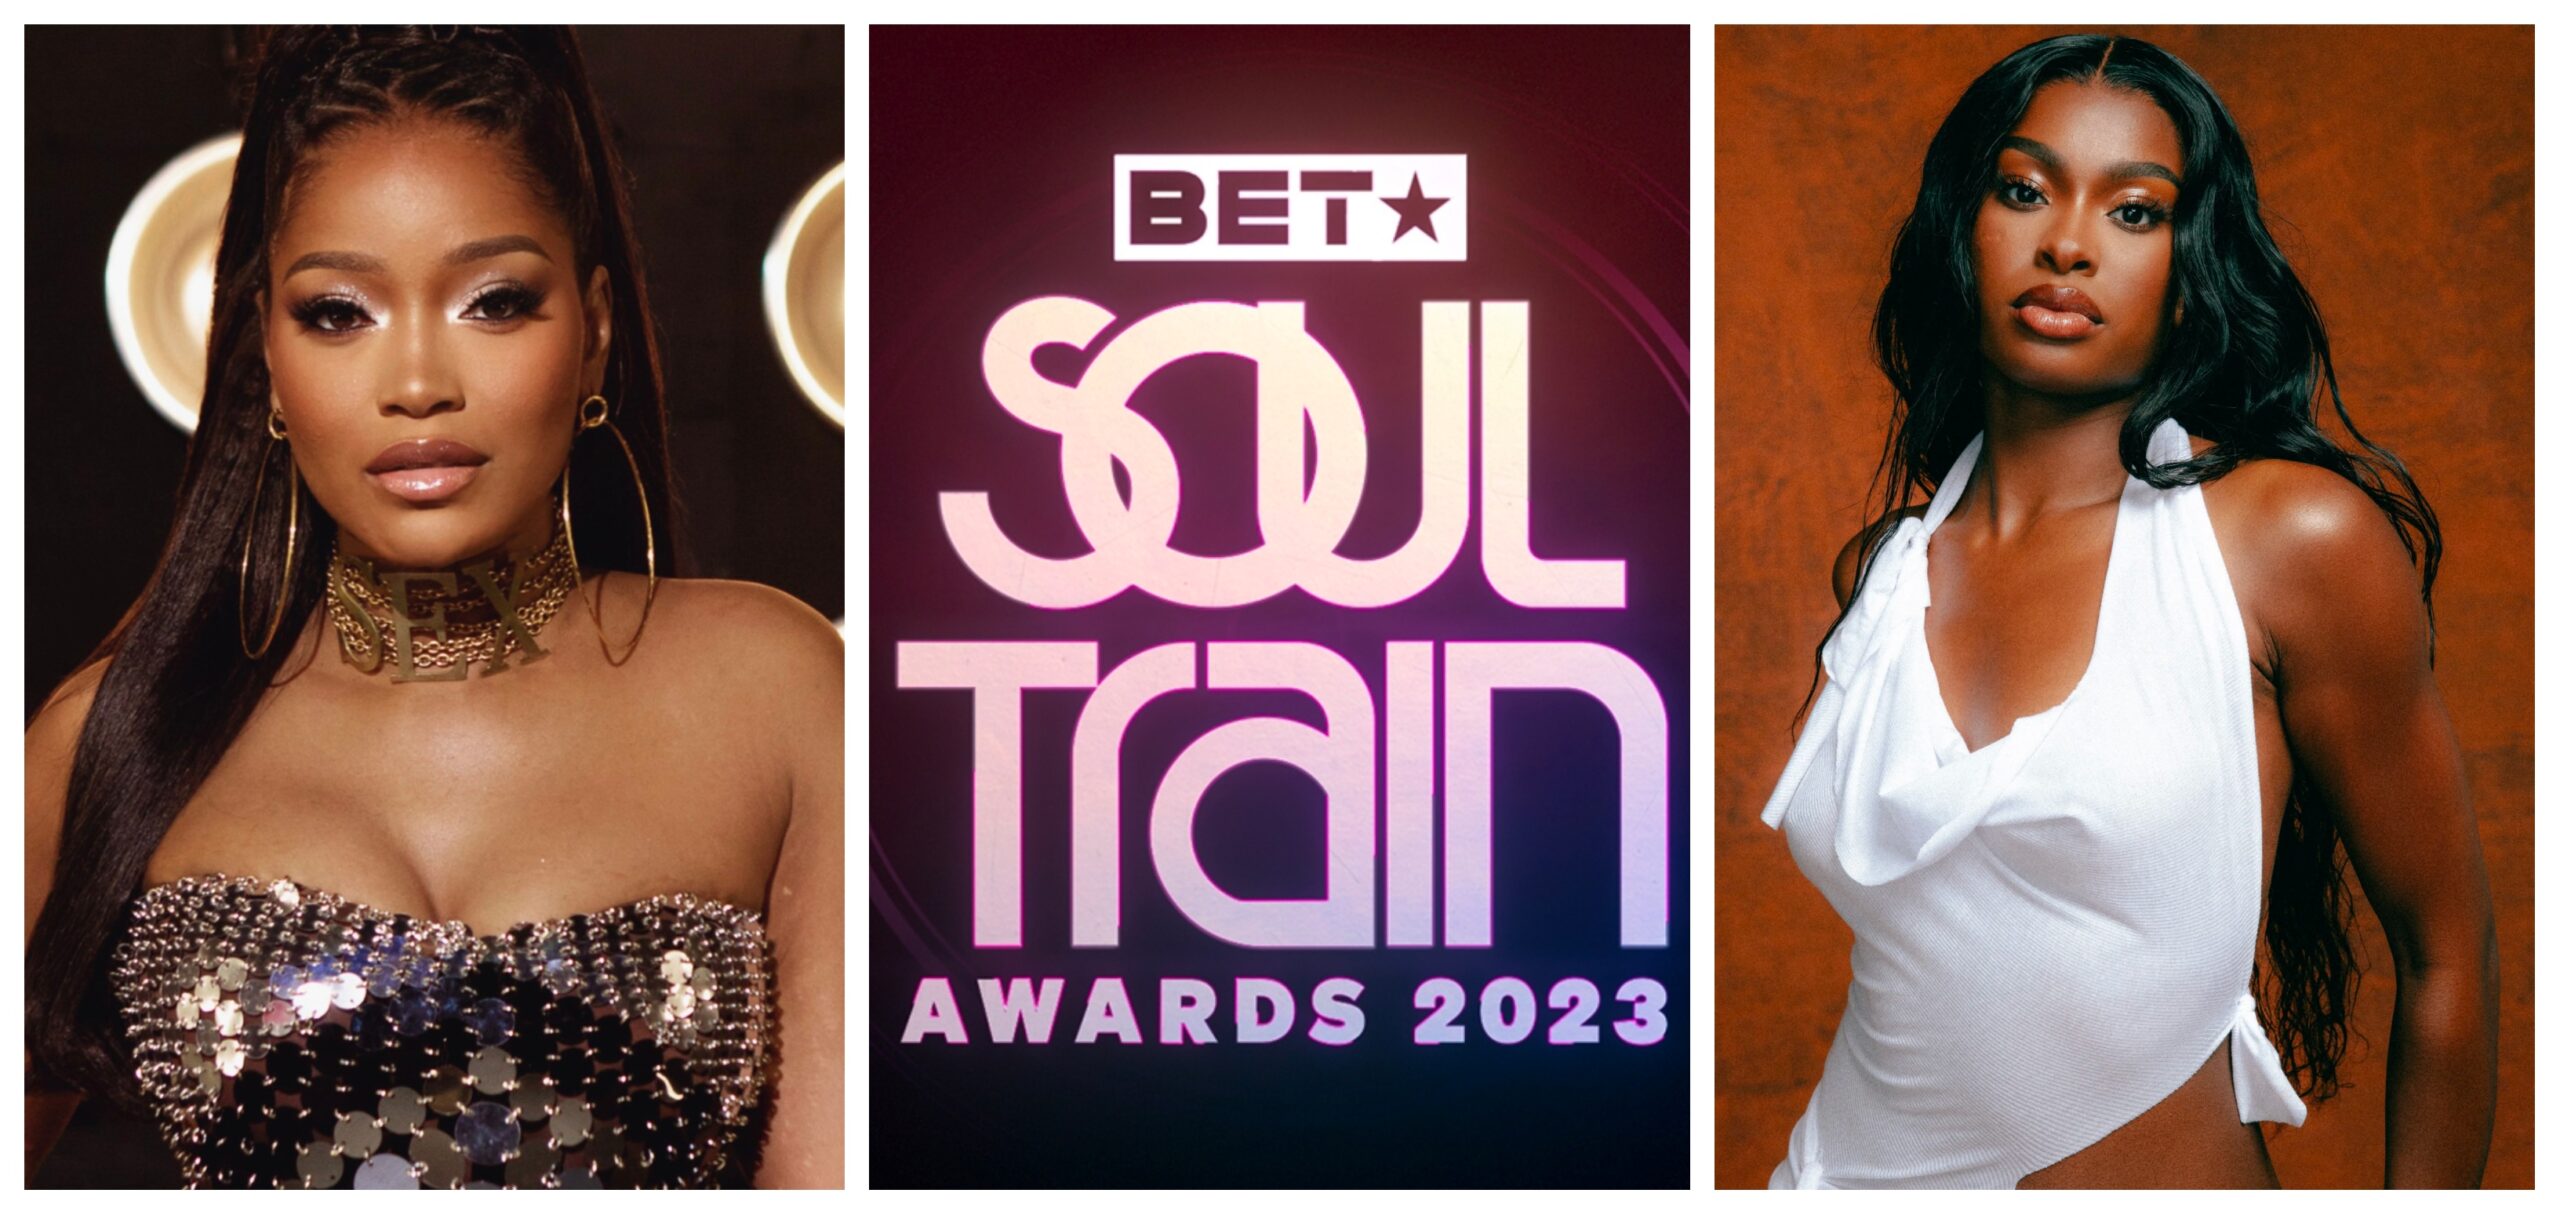 Soul Train Awards 2023 Keke Palmer to Host / Coco Jones, SWV, Muni